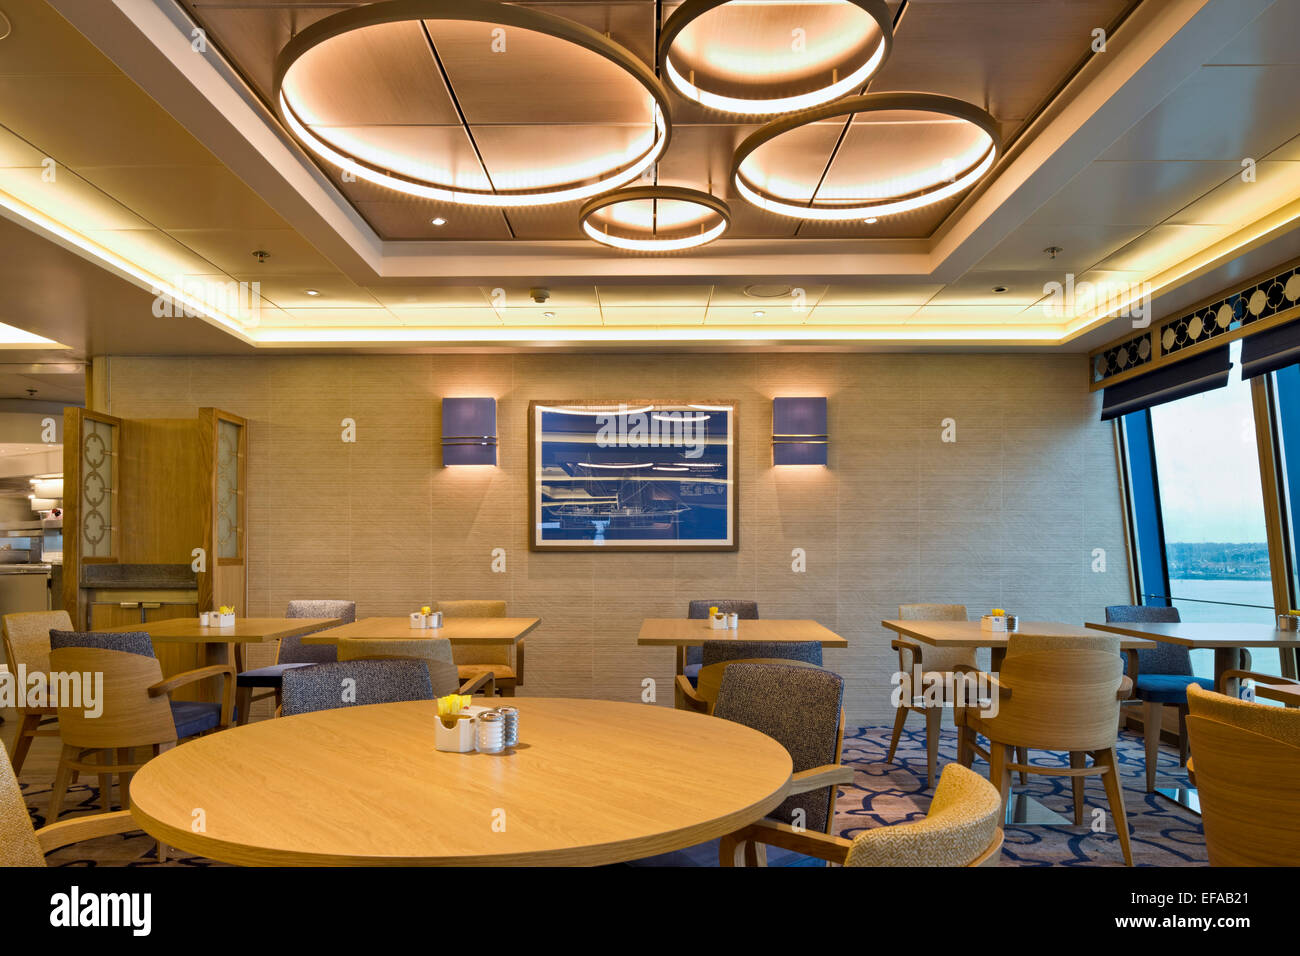 P&O Cruise Ship Interiors, Southampton, United Kingdom. Architect: SMC Design, 2014. Restaurant. Stock Photo